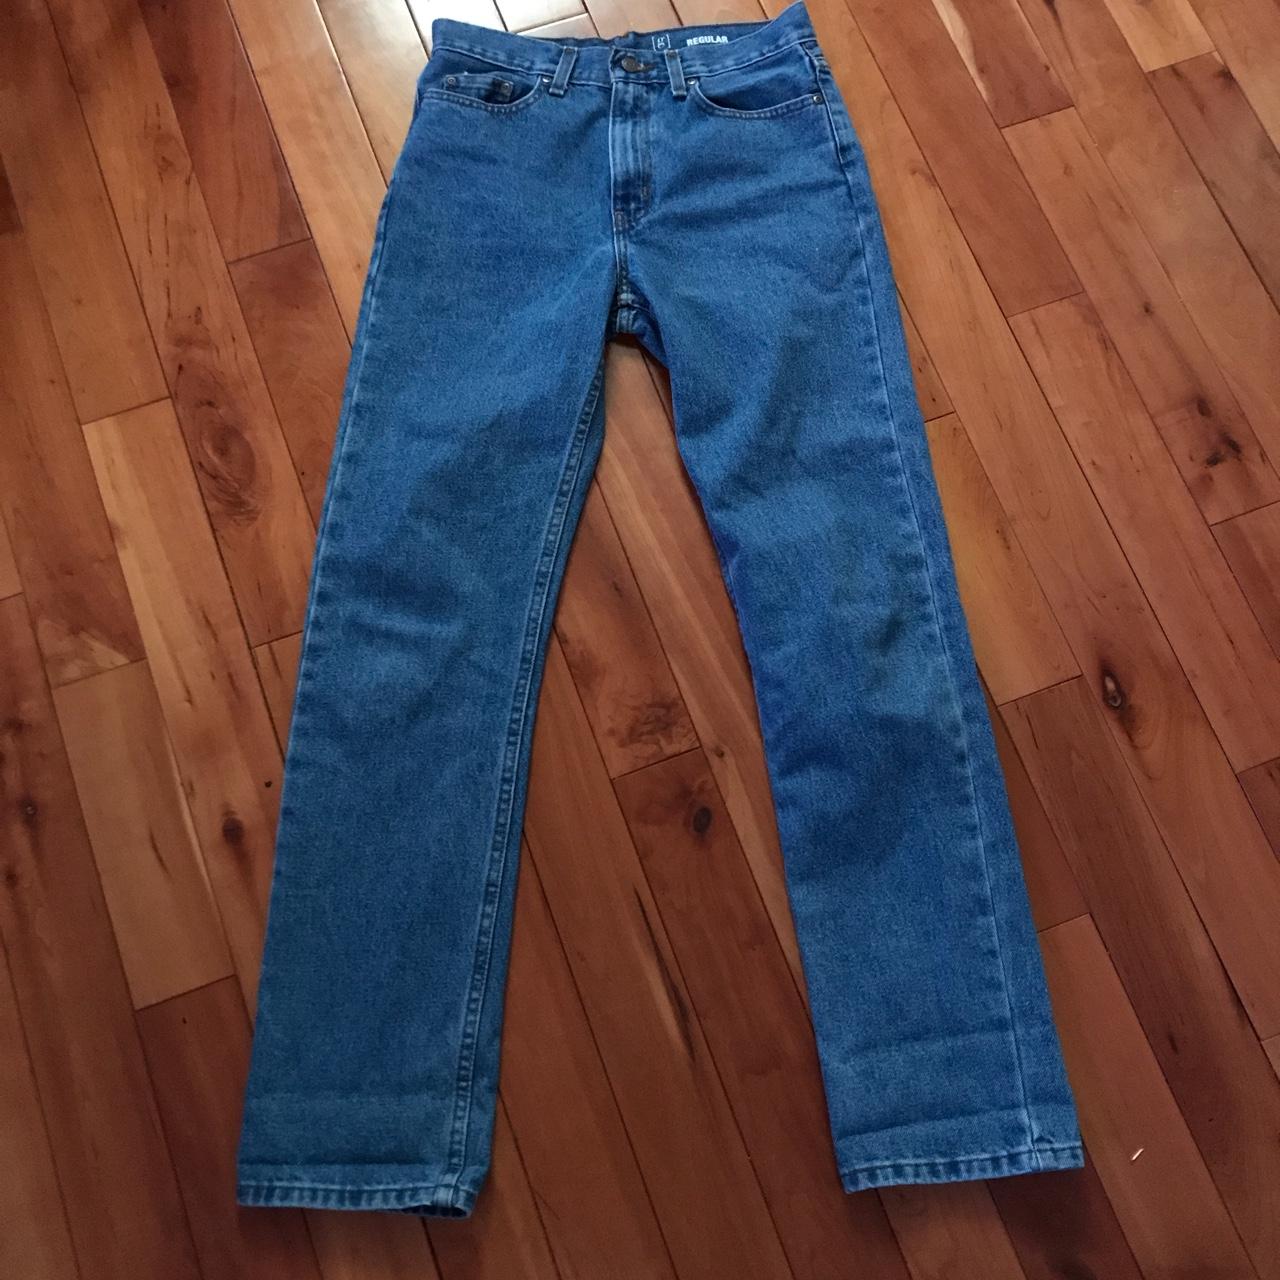 light wash straight leg jeans mom jean style perfect - Depop